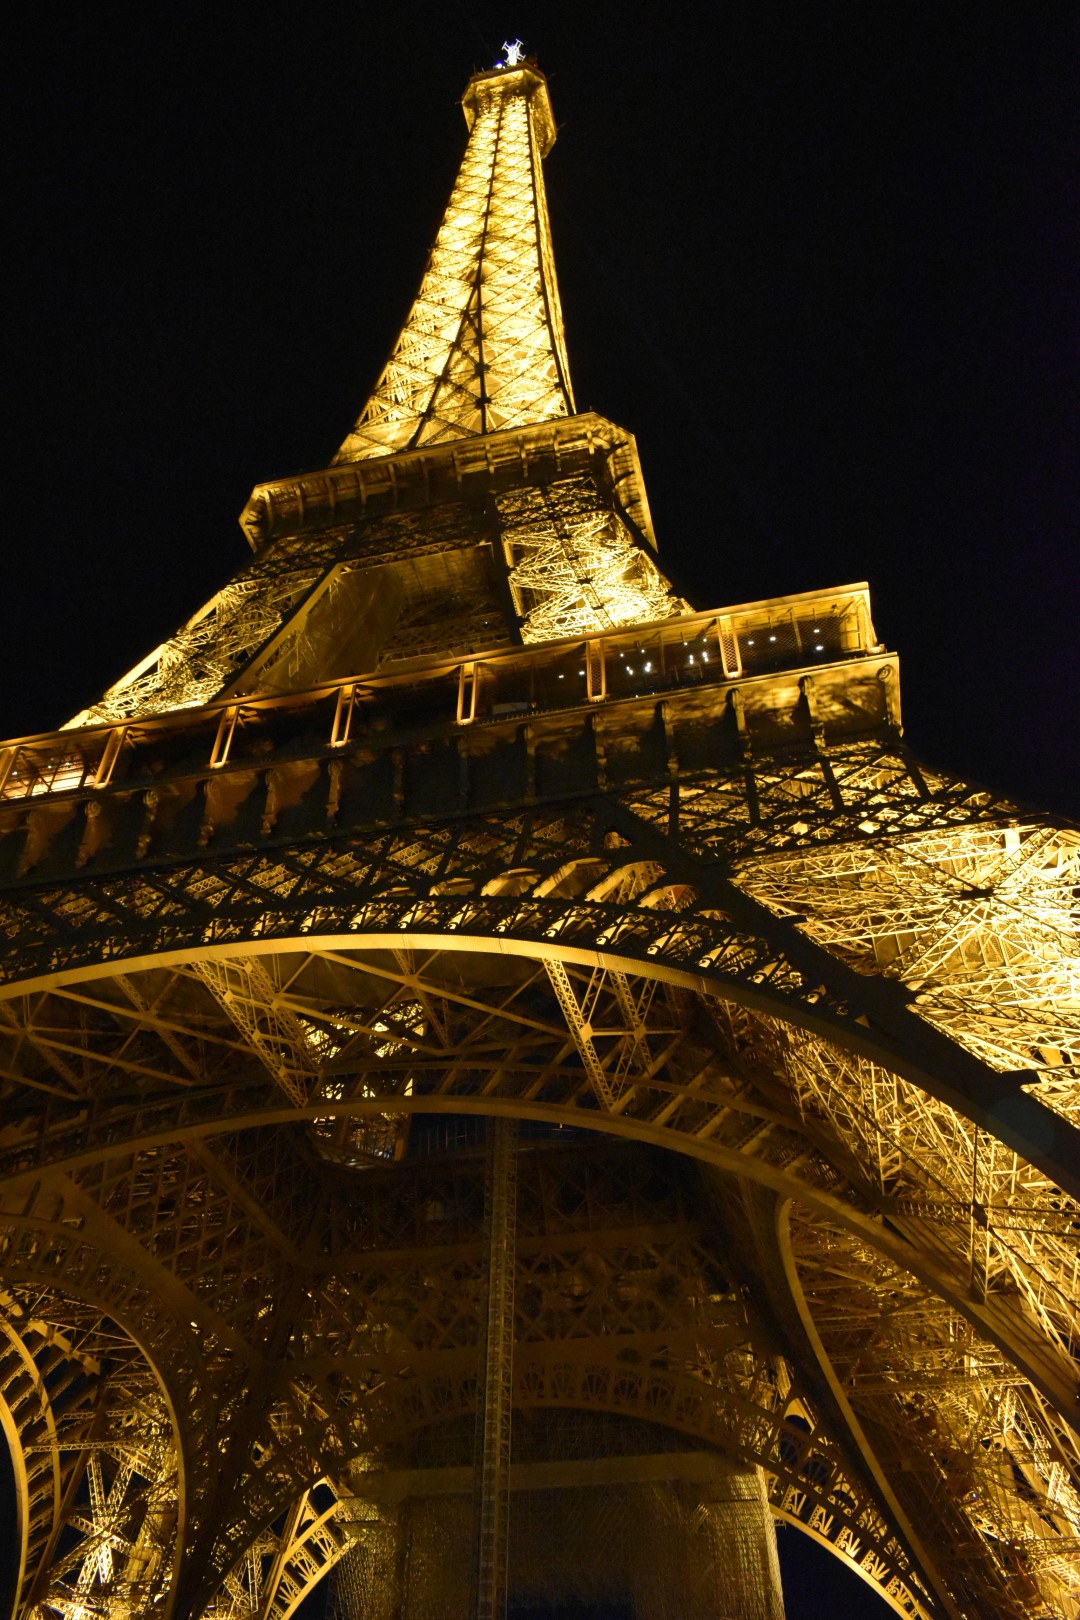 Bottom of the Eiffel Tower, Paris